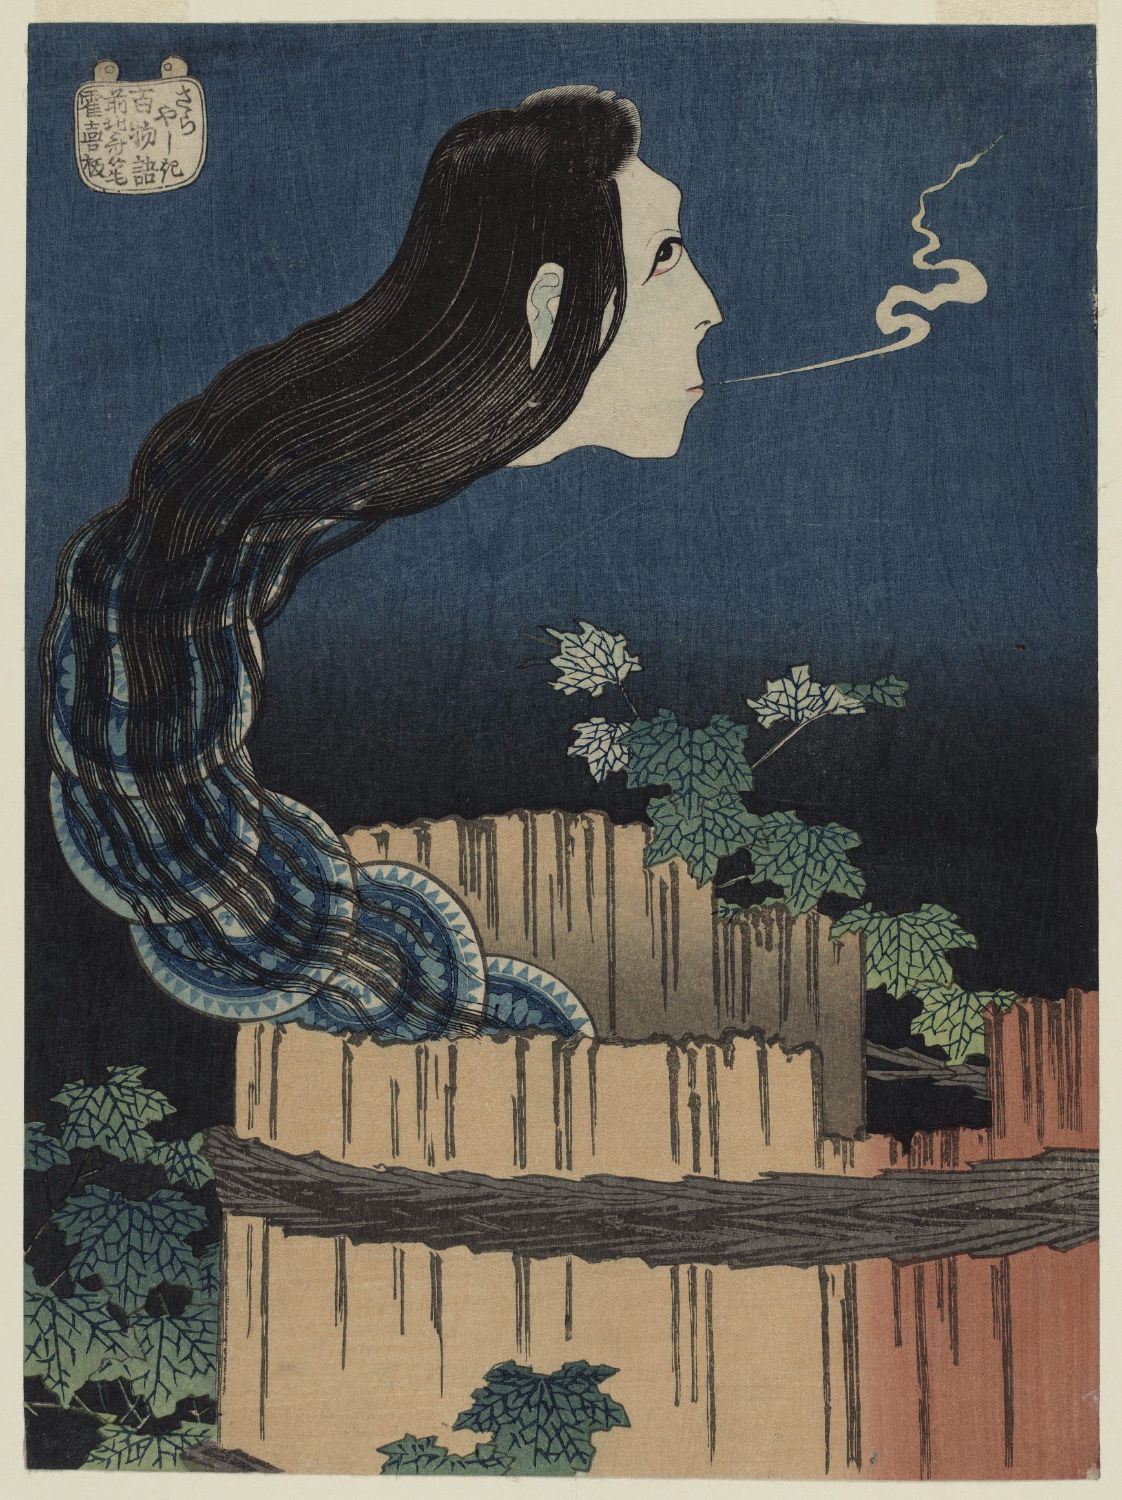 La casa dei piatti by Katsushika Hokusai - 1831-32 - 23,7 x 17,6 cm 